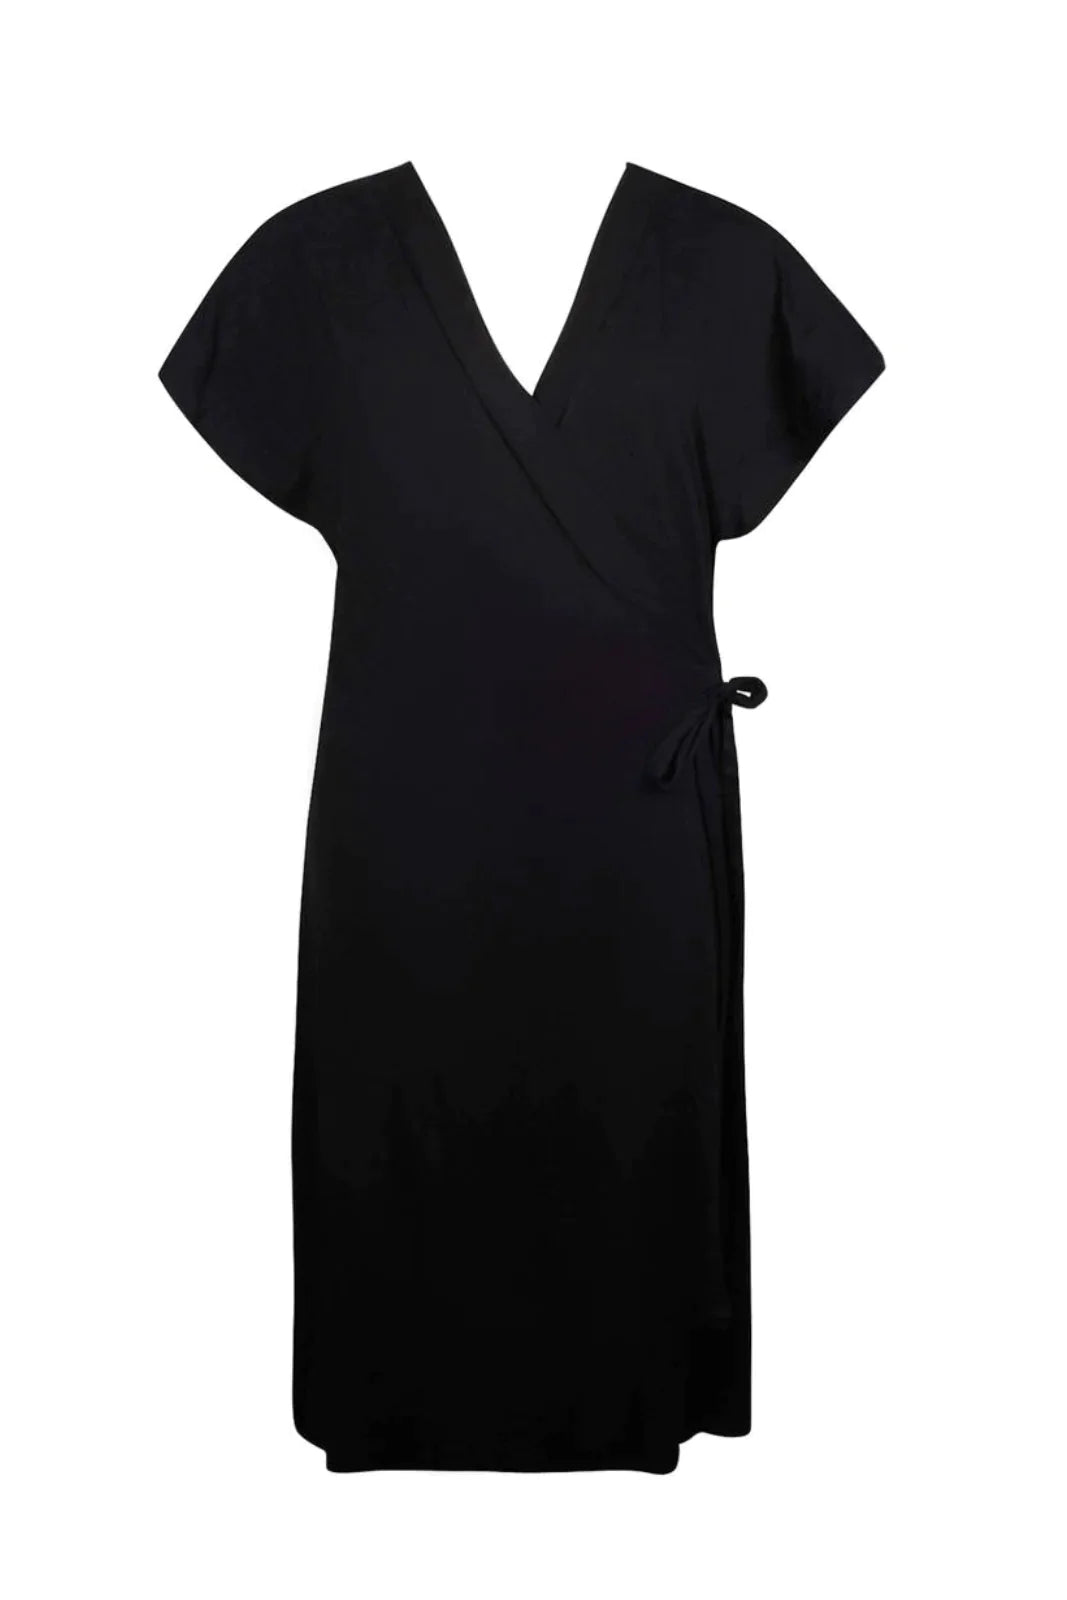 ANTIGEL 14B LA CHIQUISSIMA MI-LENGTH BEACH DRESS - BLACK